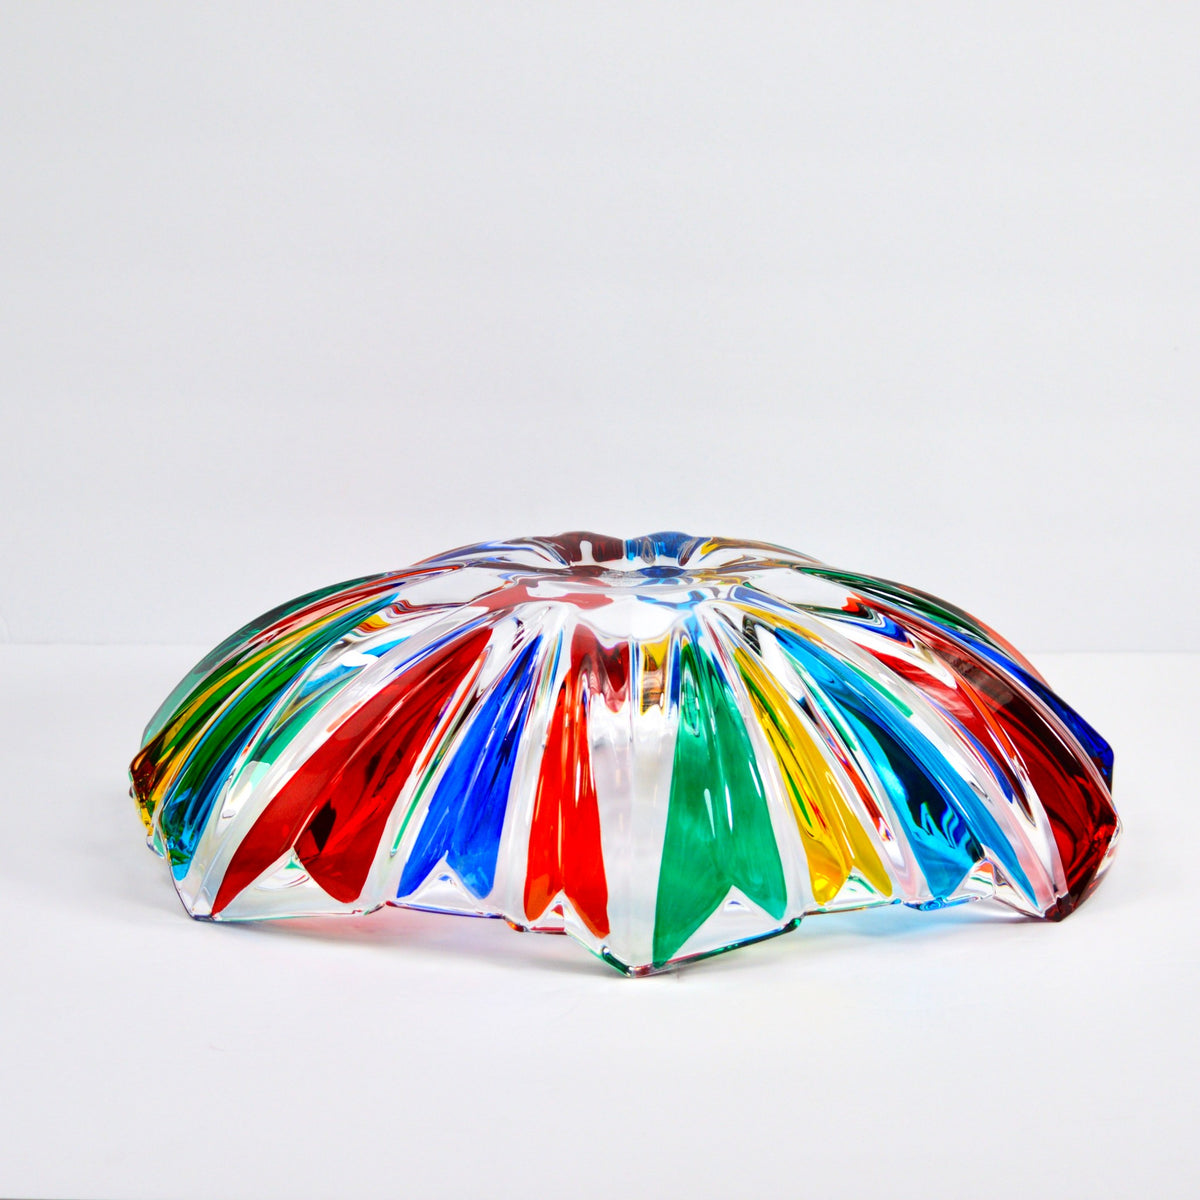 Empress Italian Crystal Oval Centerpiece Bowl, Made in Italy - My Italian Decor